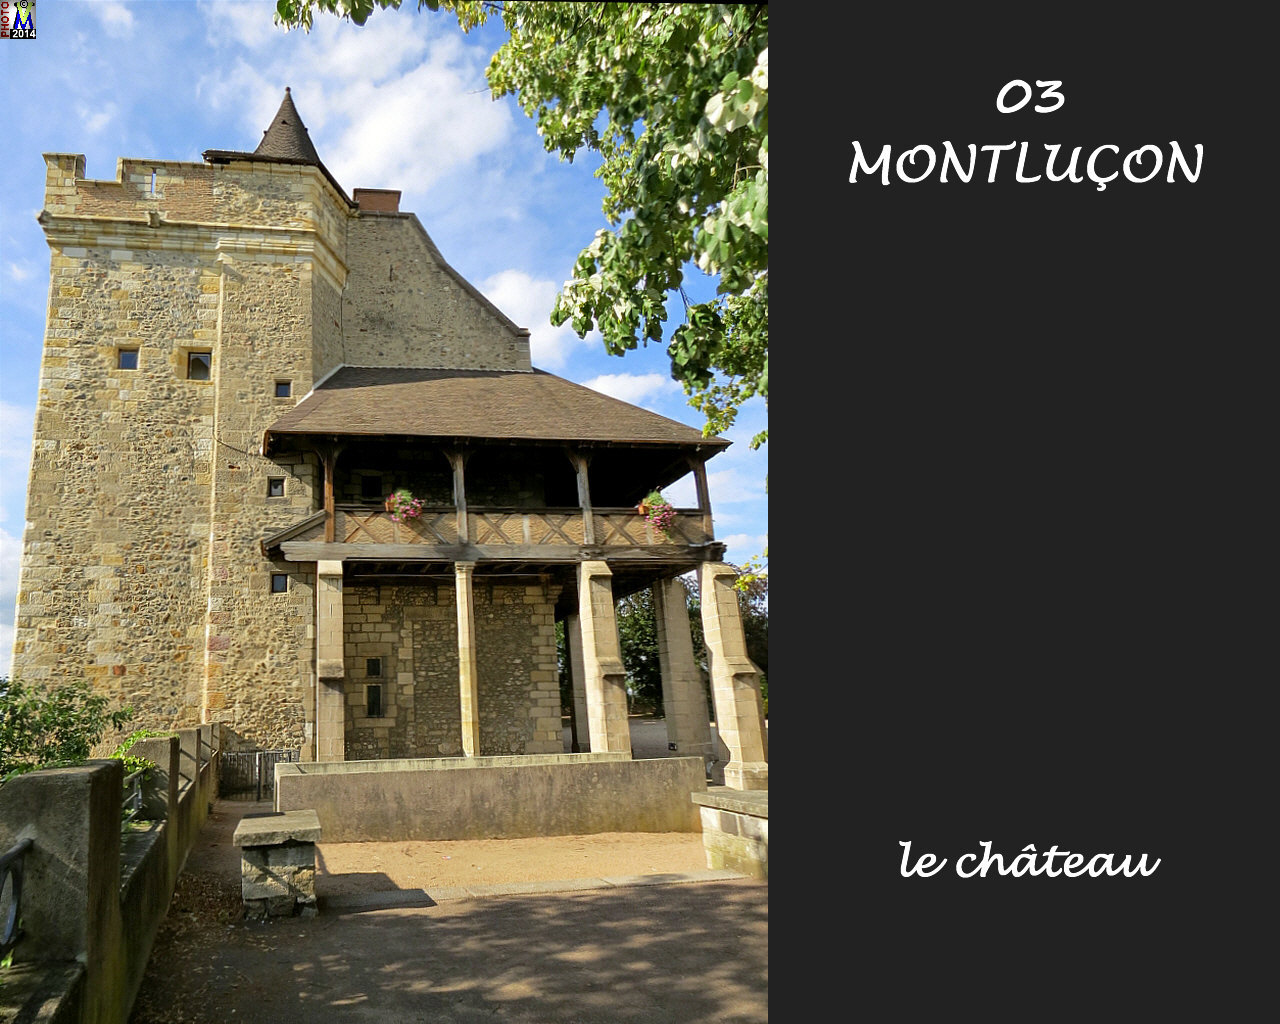 03MONTLUCON-chateau_108.jpg